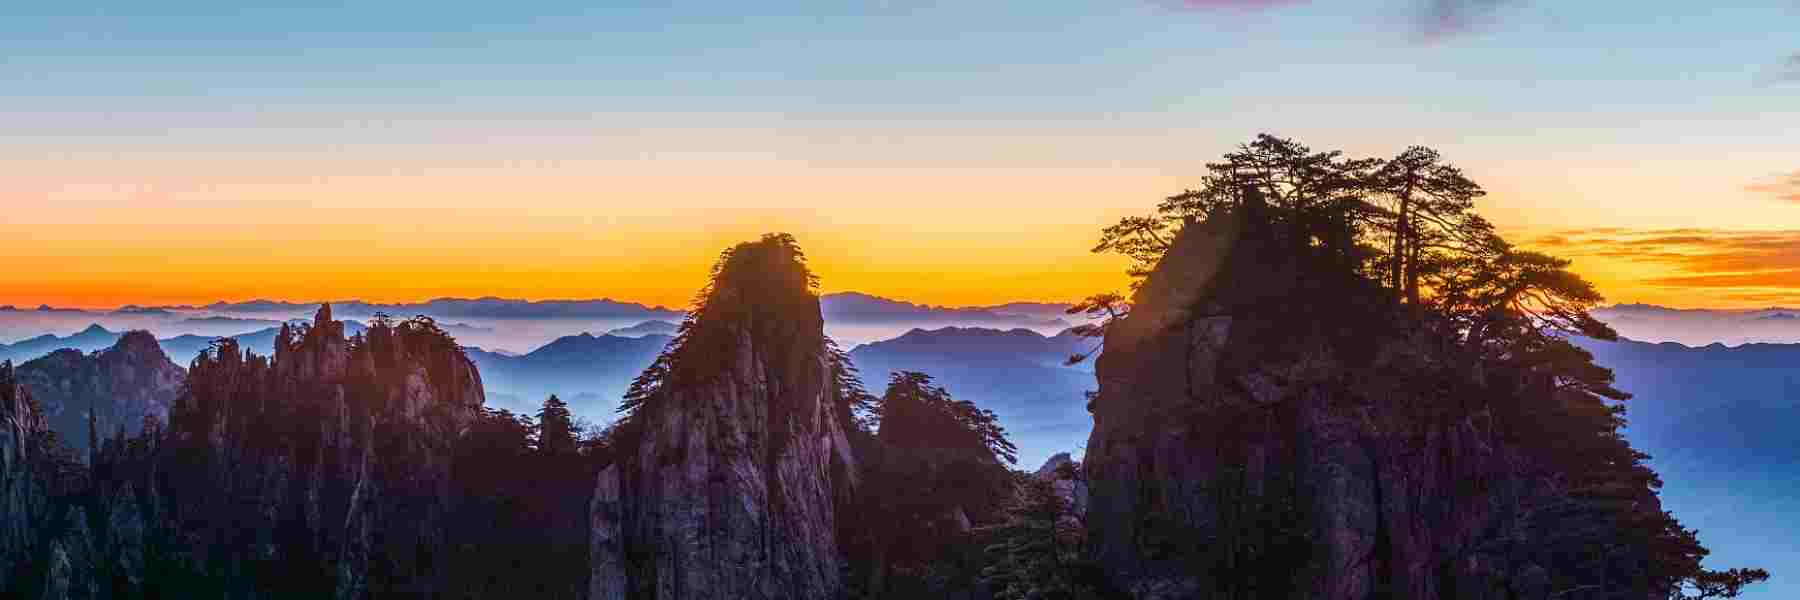 Mt huangshan